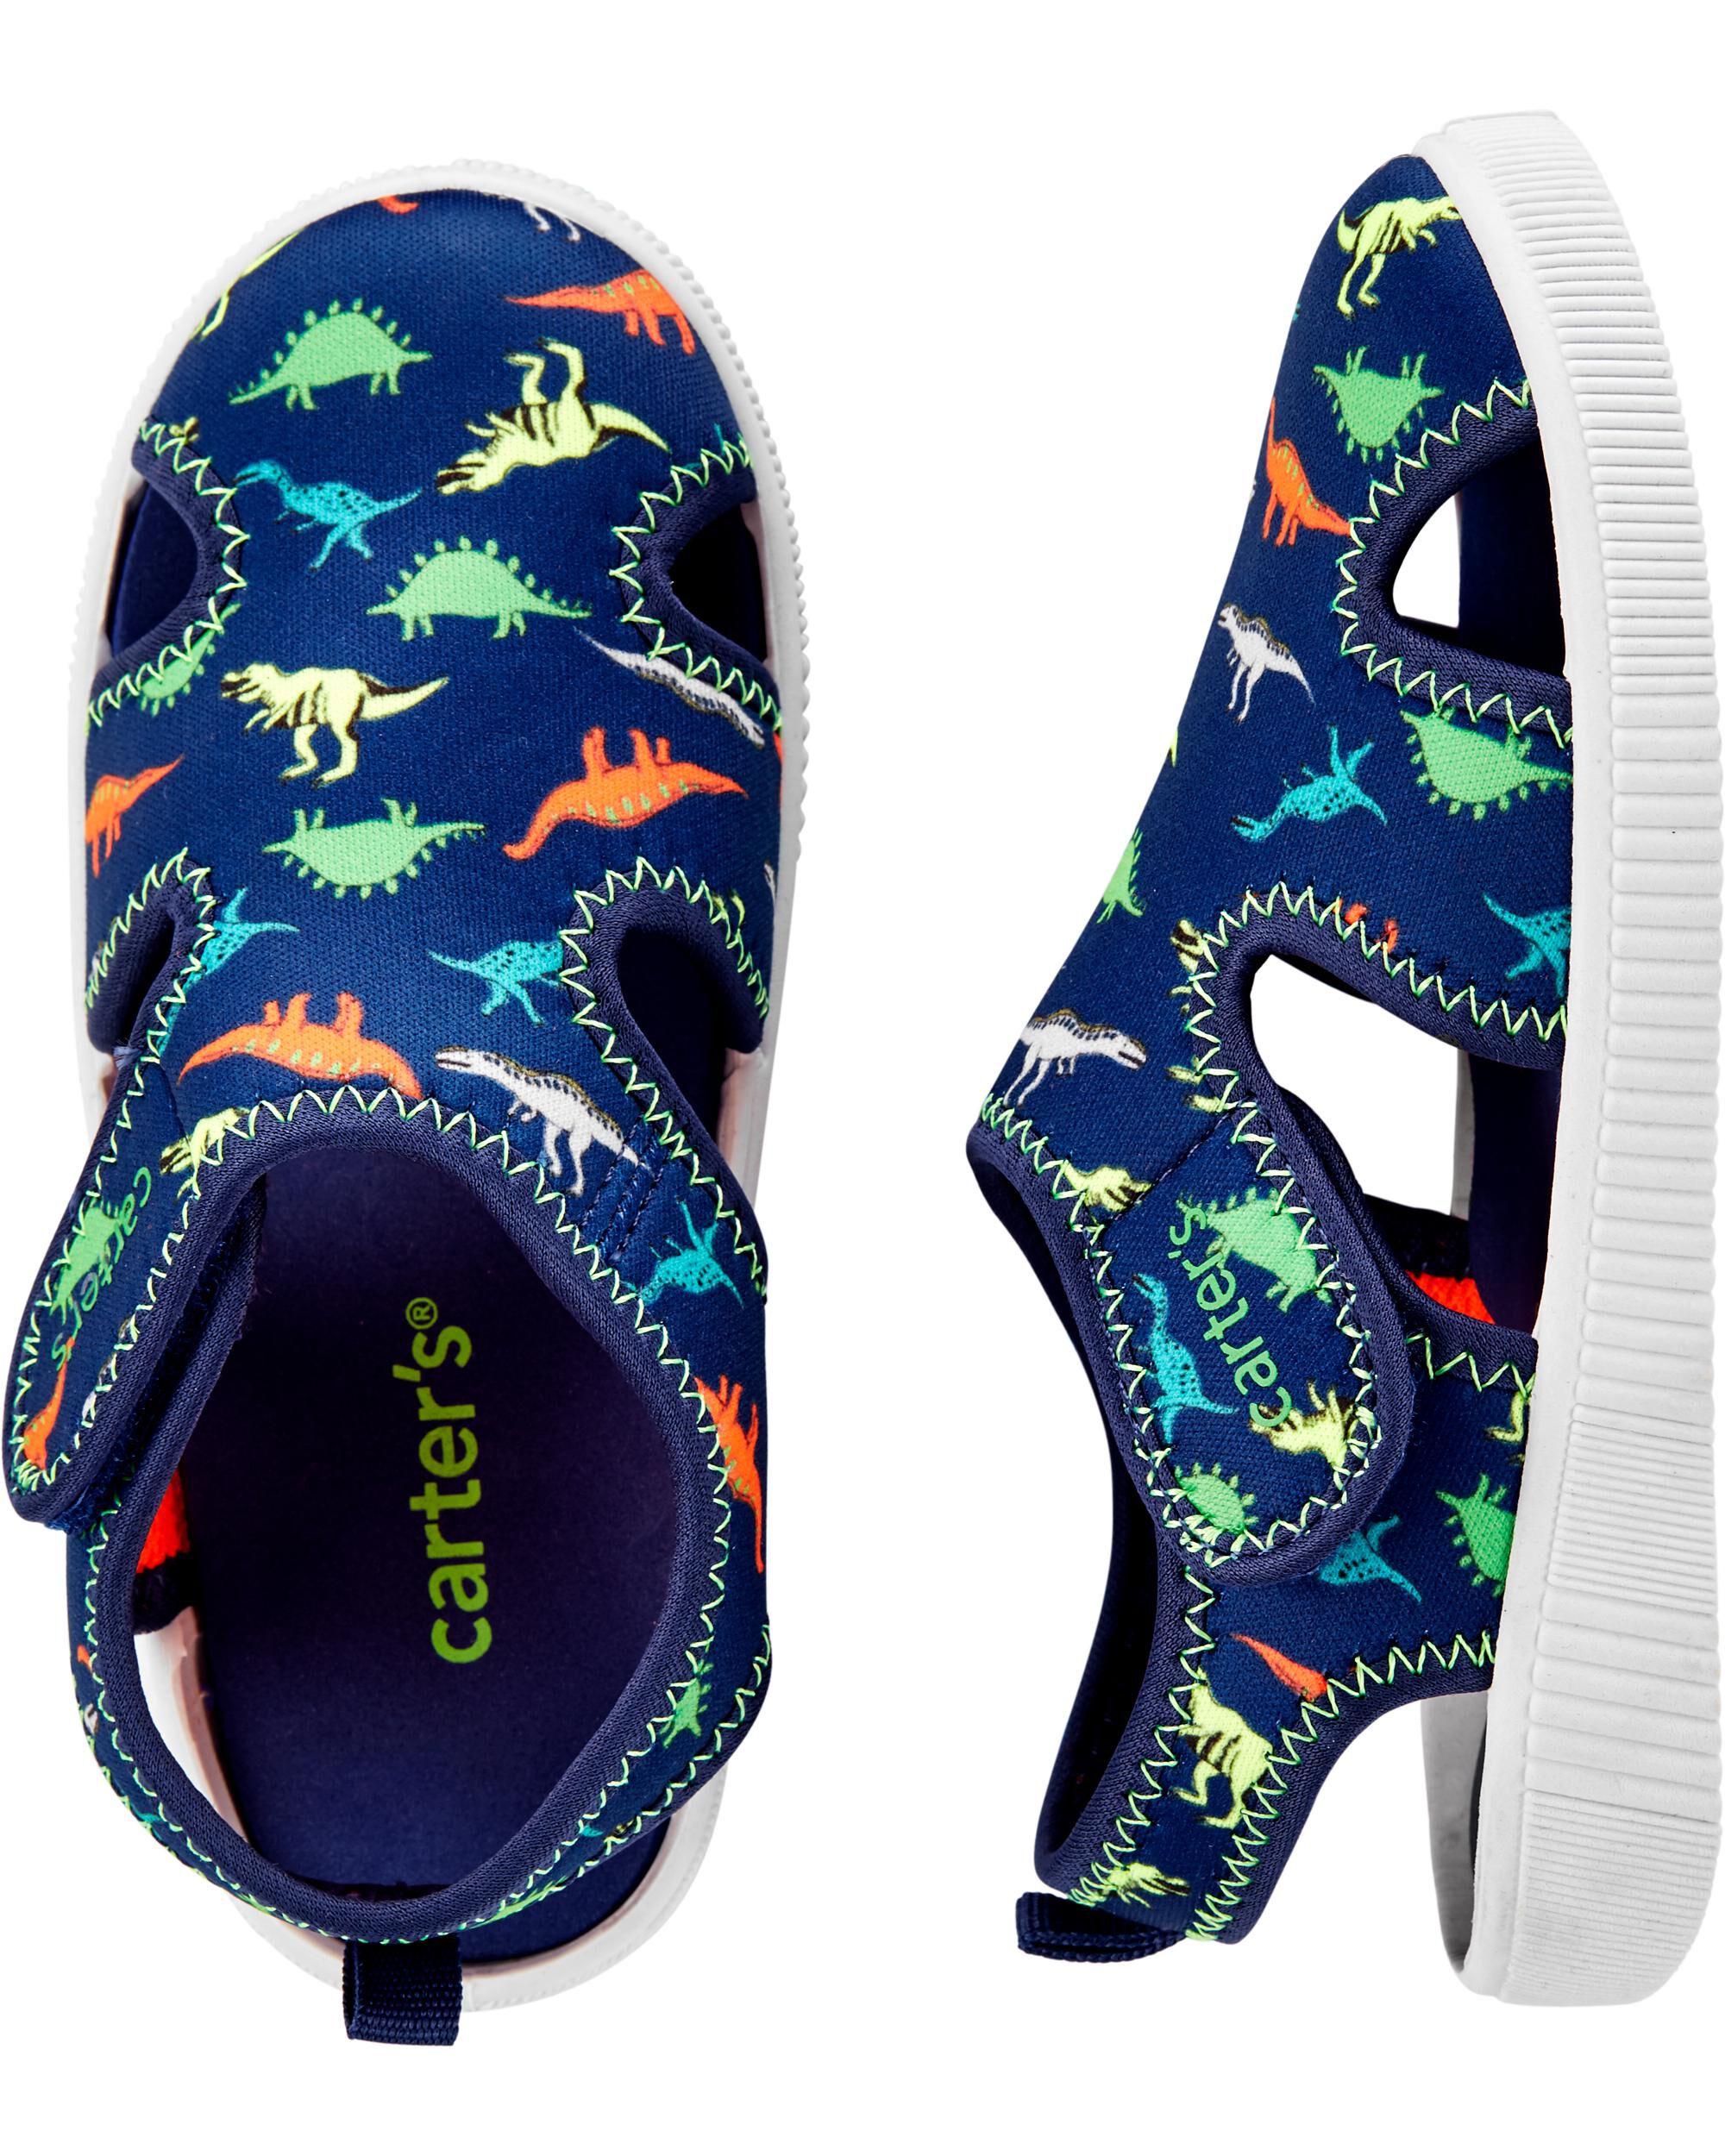 carter's dinosaur shoes